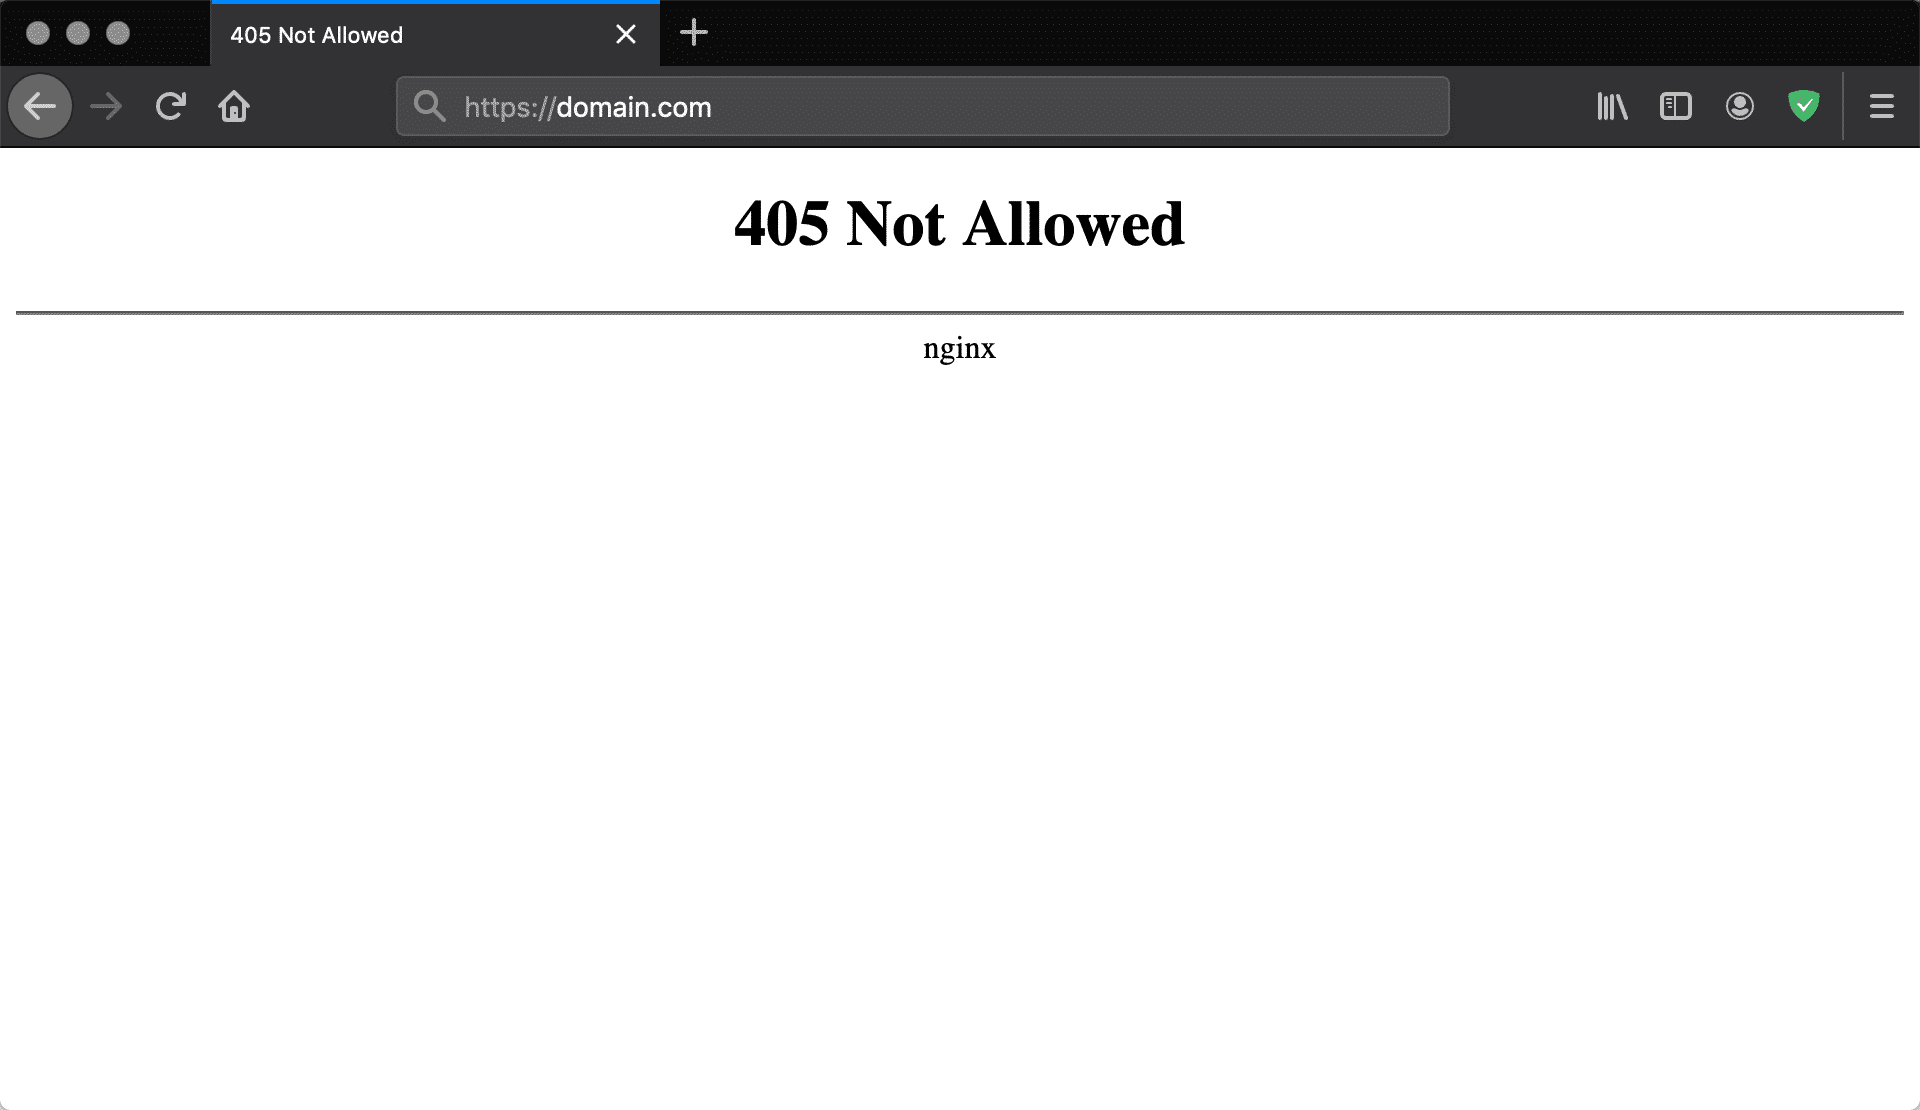 Firefoxの405 Not Allowedエラー（Nginx）画面